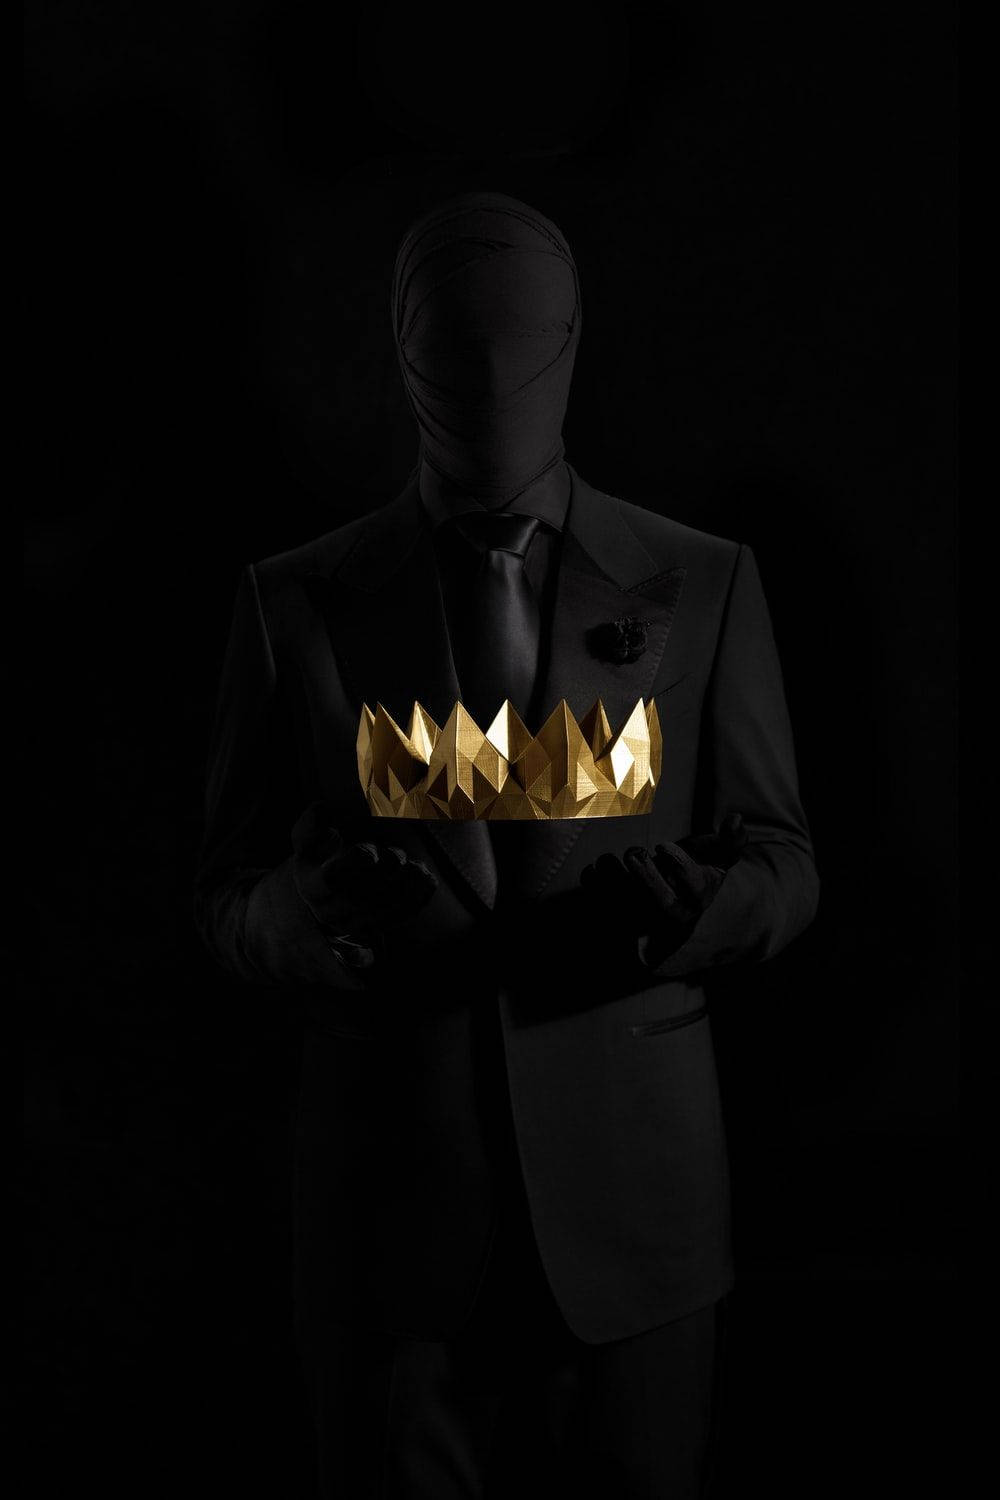 Black King Crown